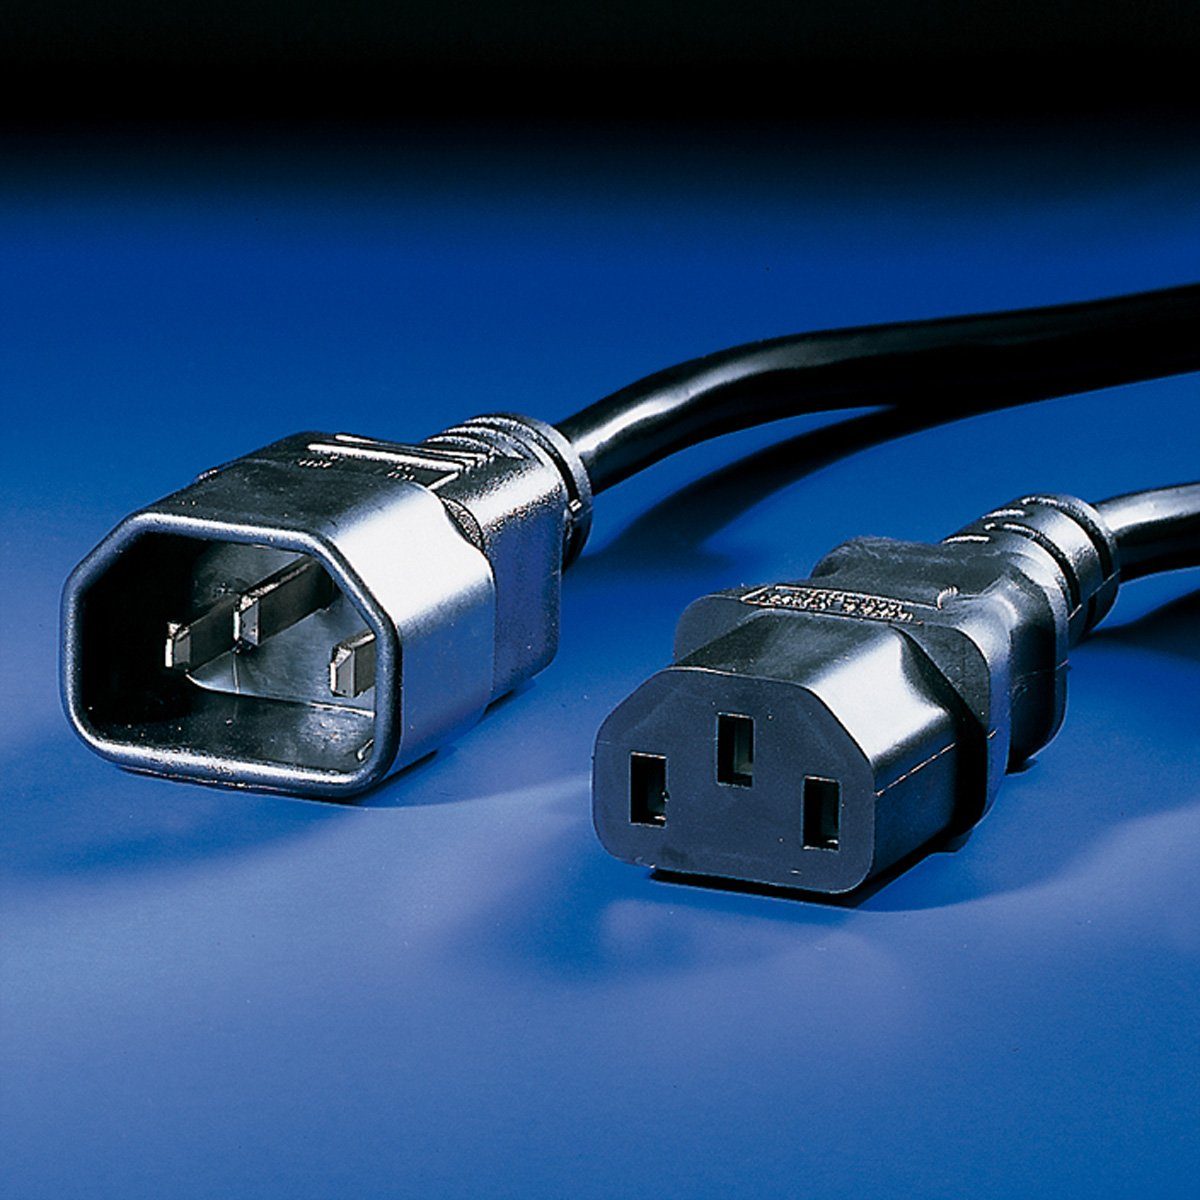 Bachmann Kaltgeräte Kabel C14, (Buchse) Stromkabel, Männlich IEC320 C13-C14 IEC320 Kaltgeräte, cm) (50.0 Kaltgeräte, 10A (Stecker), C13, 10A Weiblich